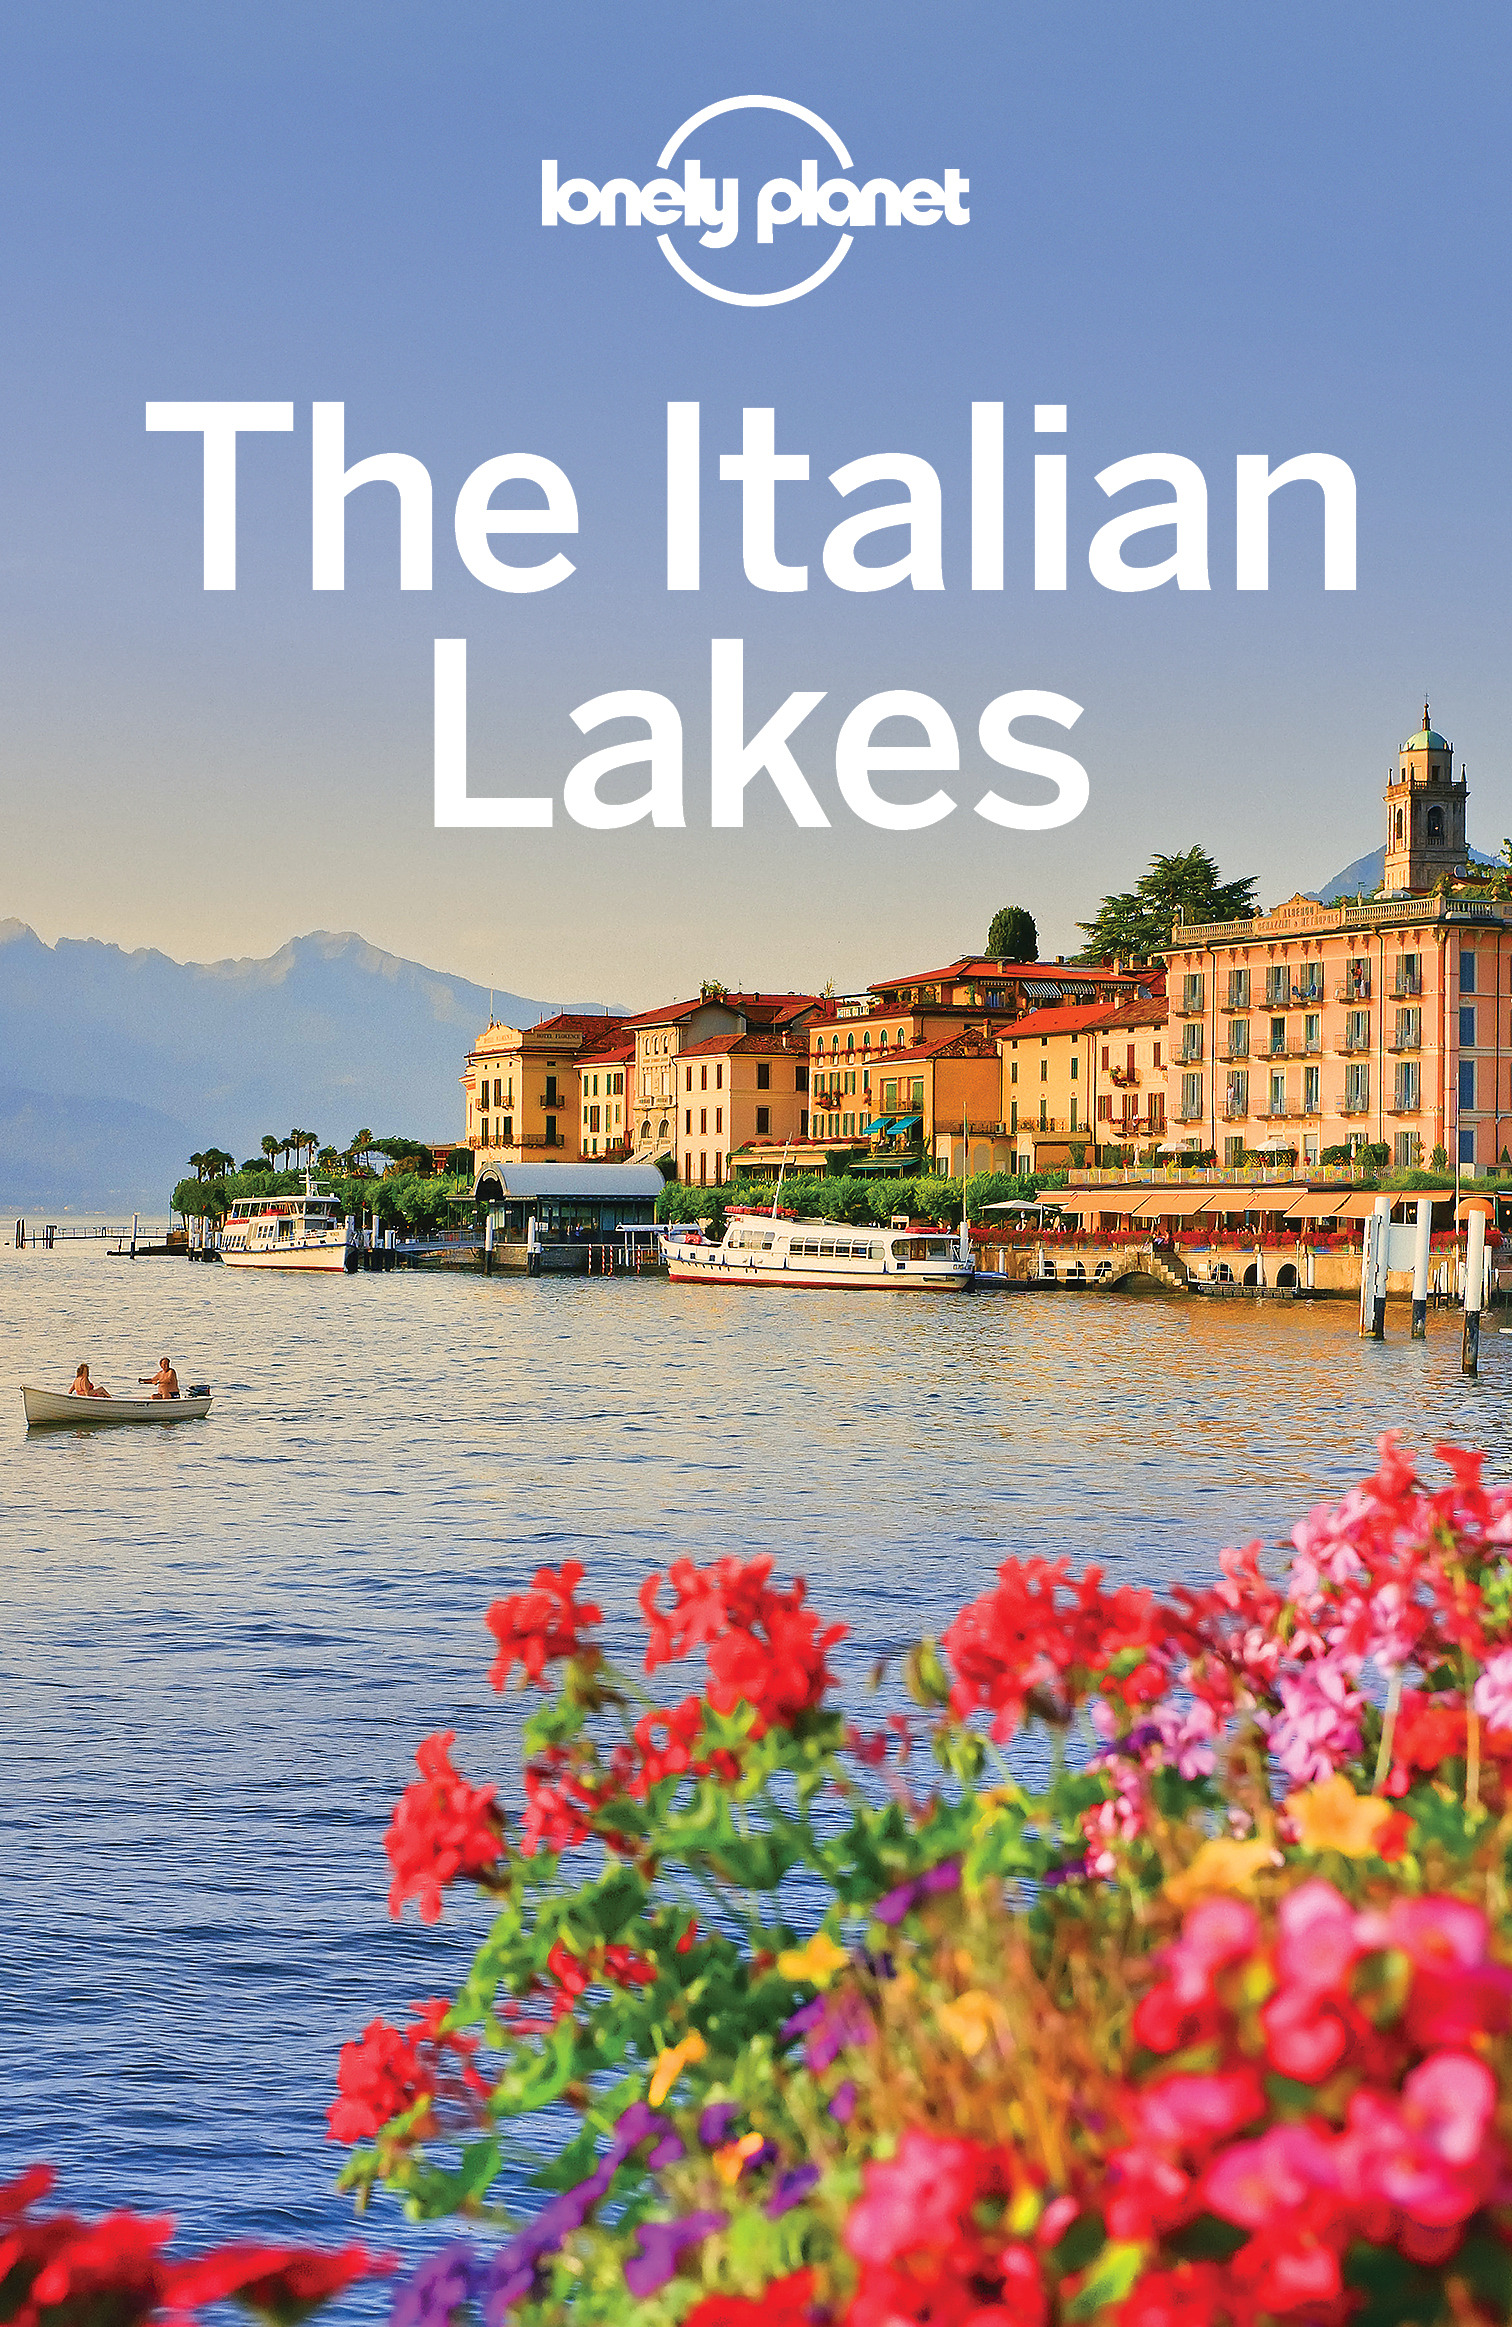 Duca, Marc Di - Lonely Planet The Italian Lakes, ebook